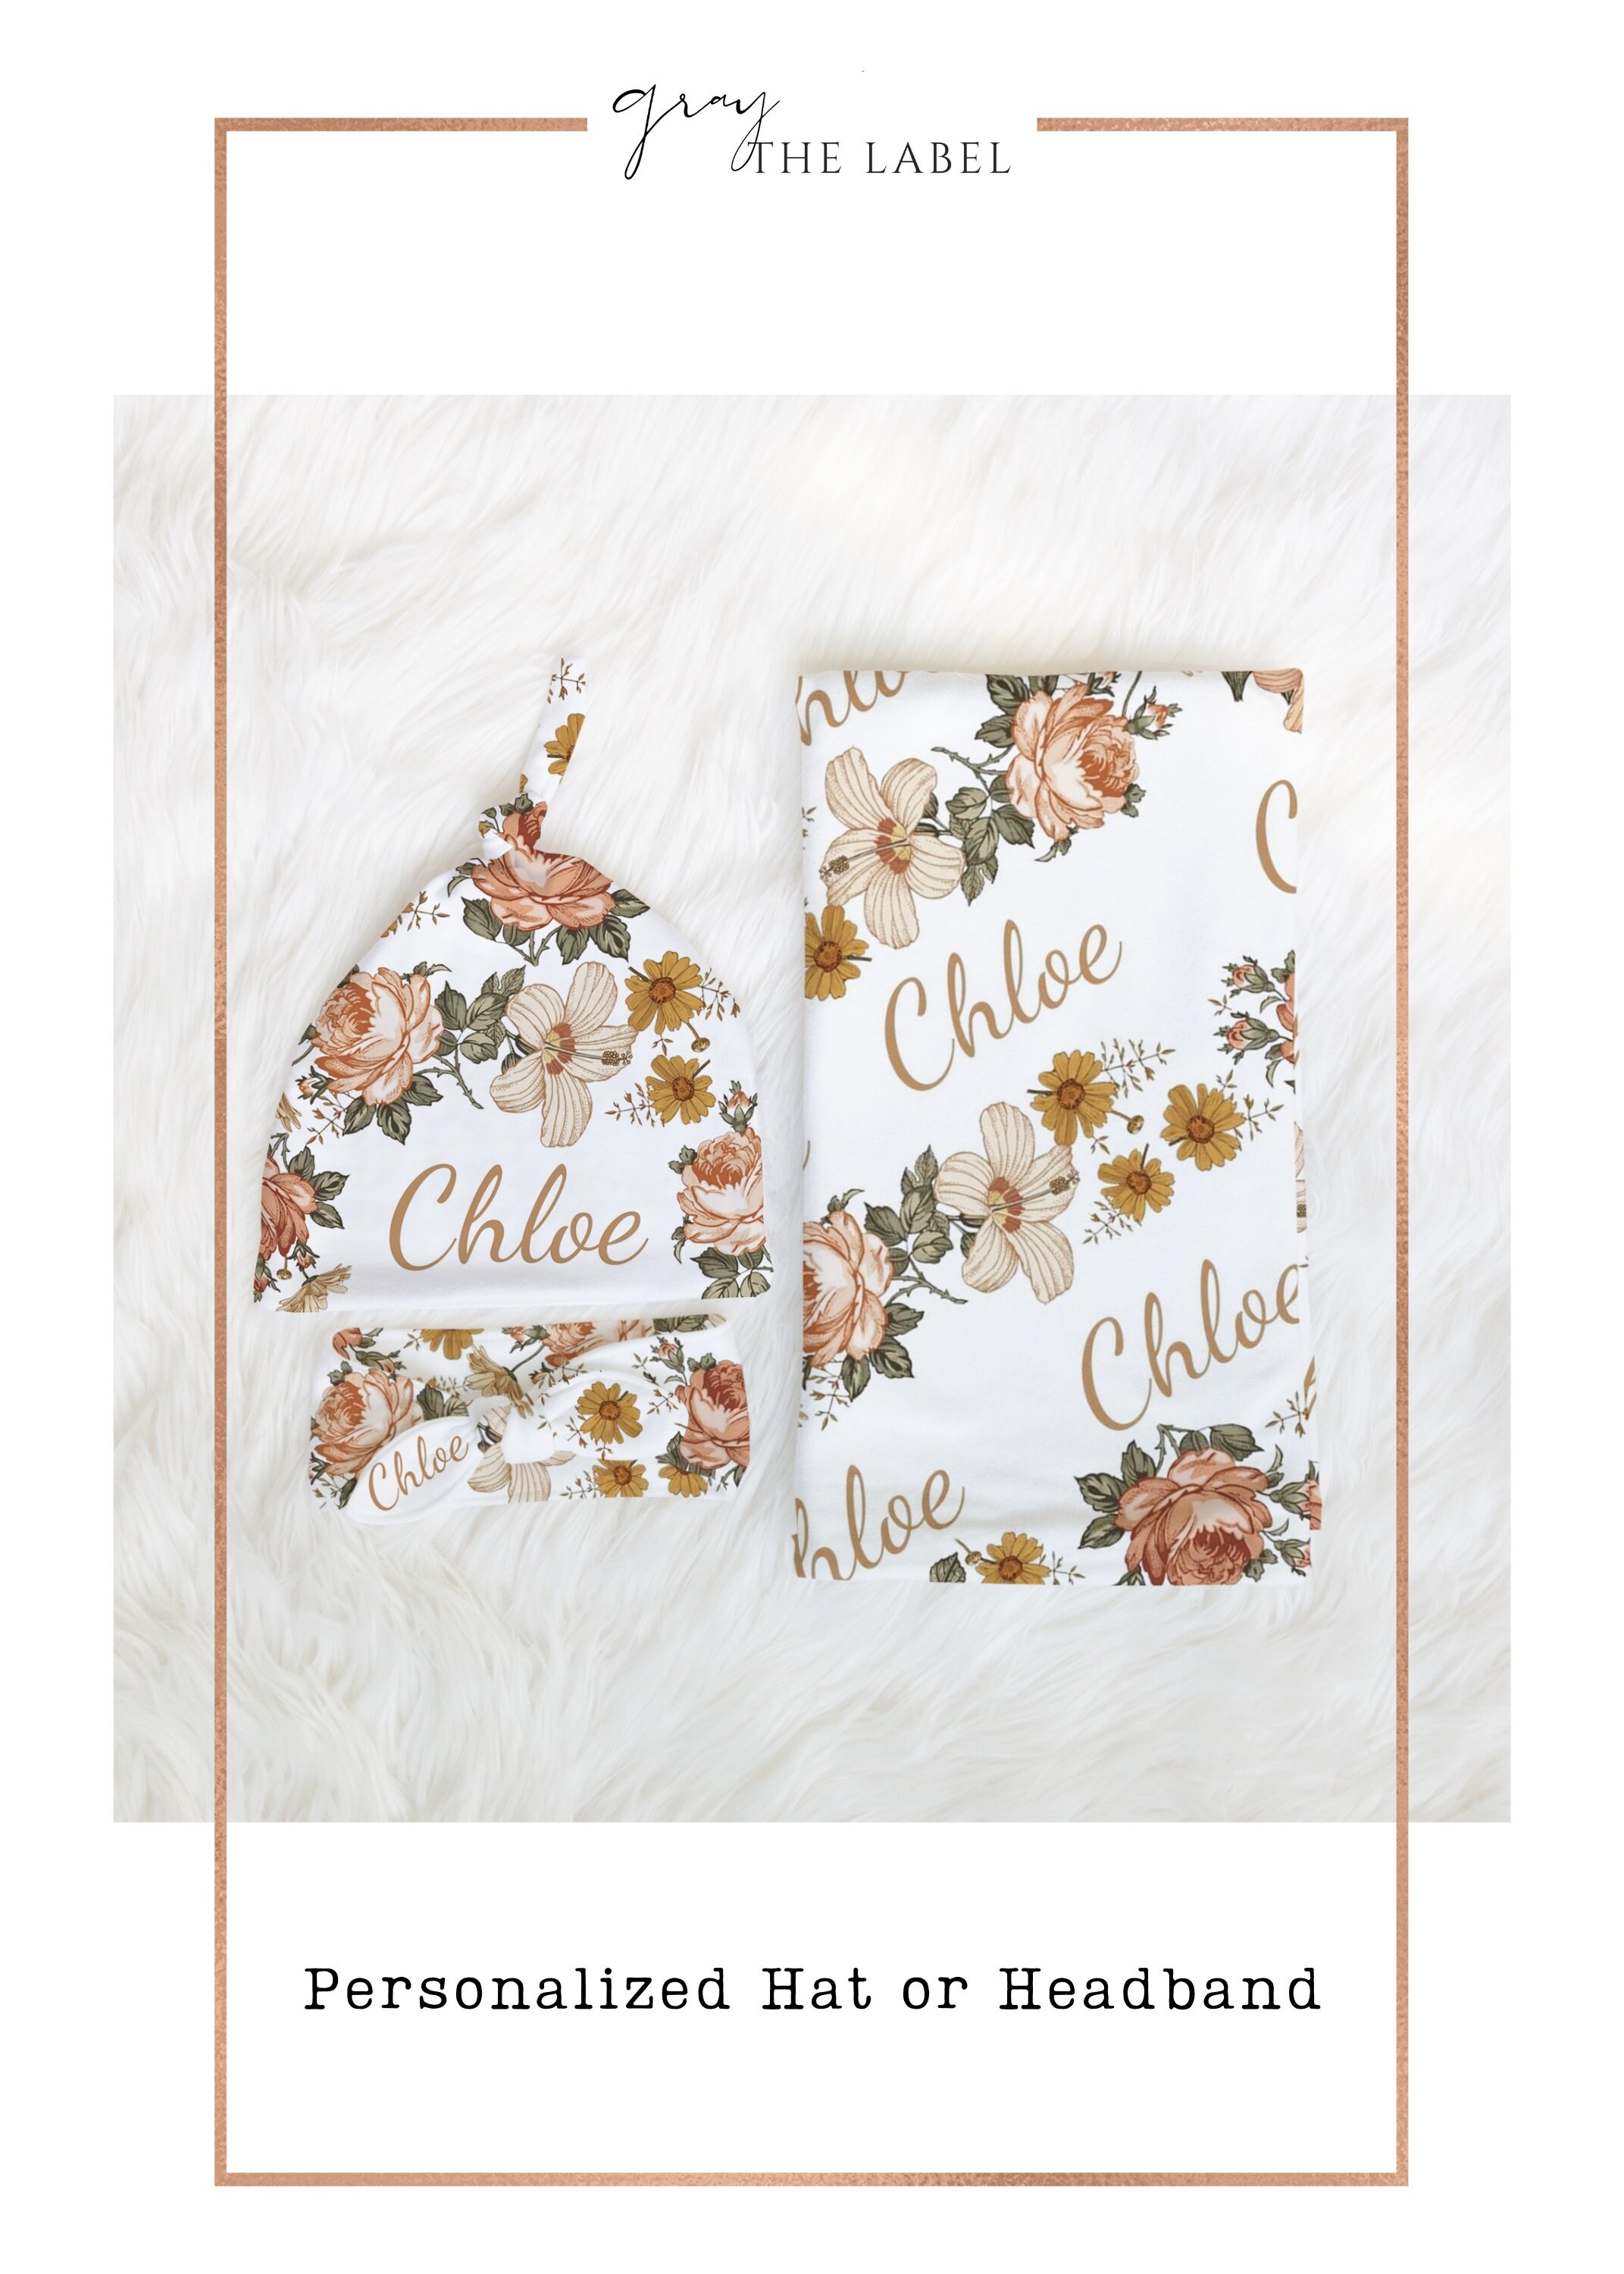 Free Printable Baby Shower Gift Wrap + Card - Lacee SwanLacee Swan